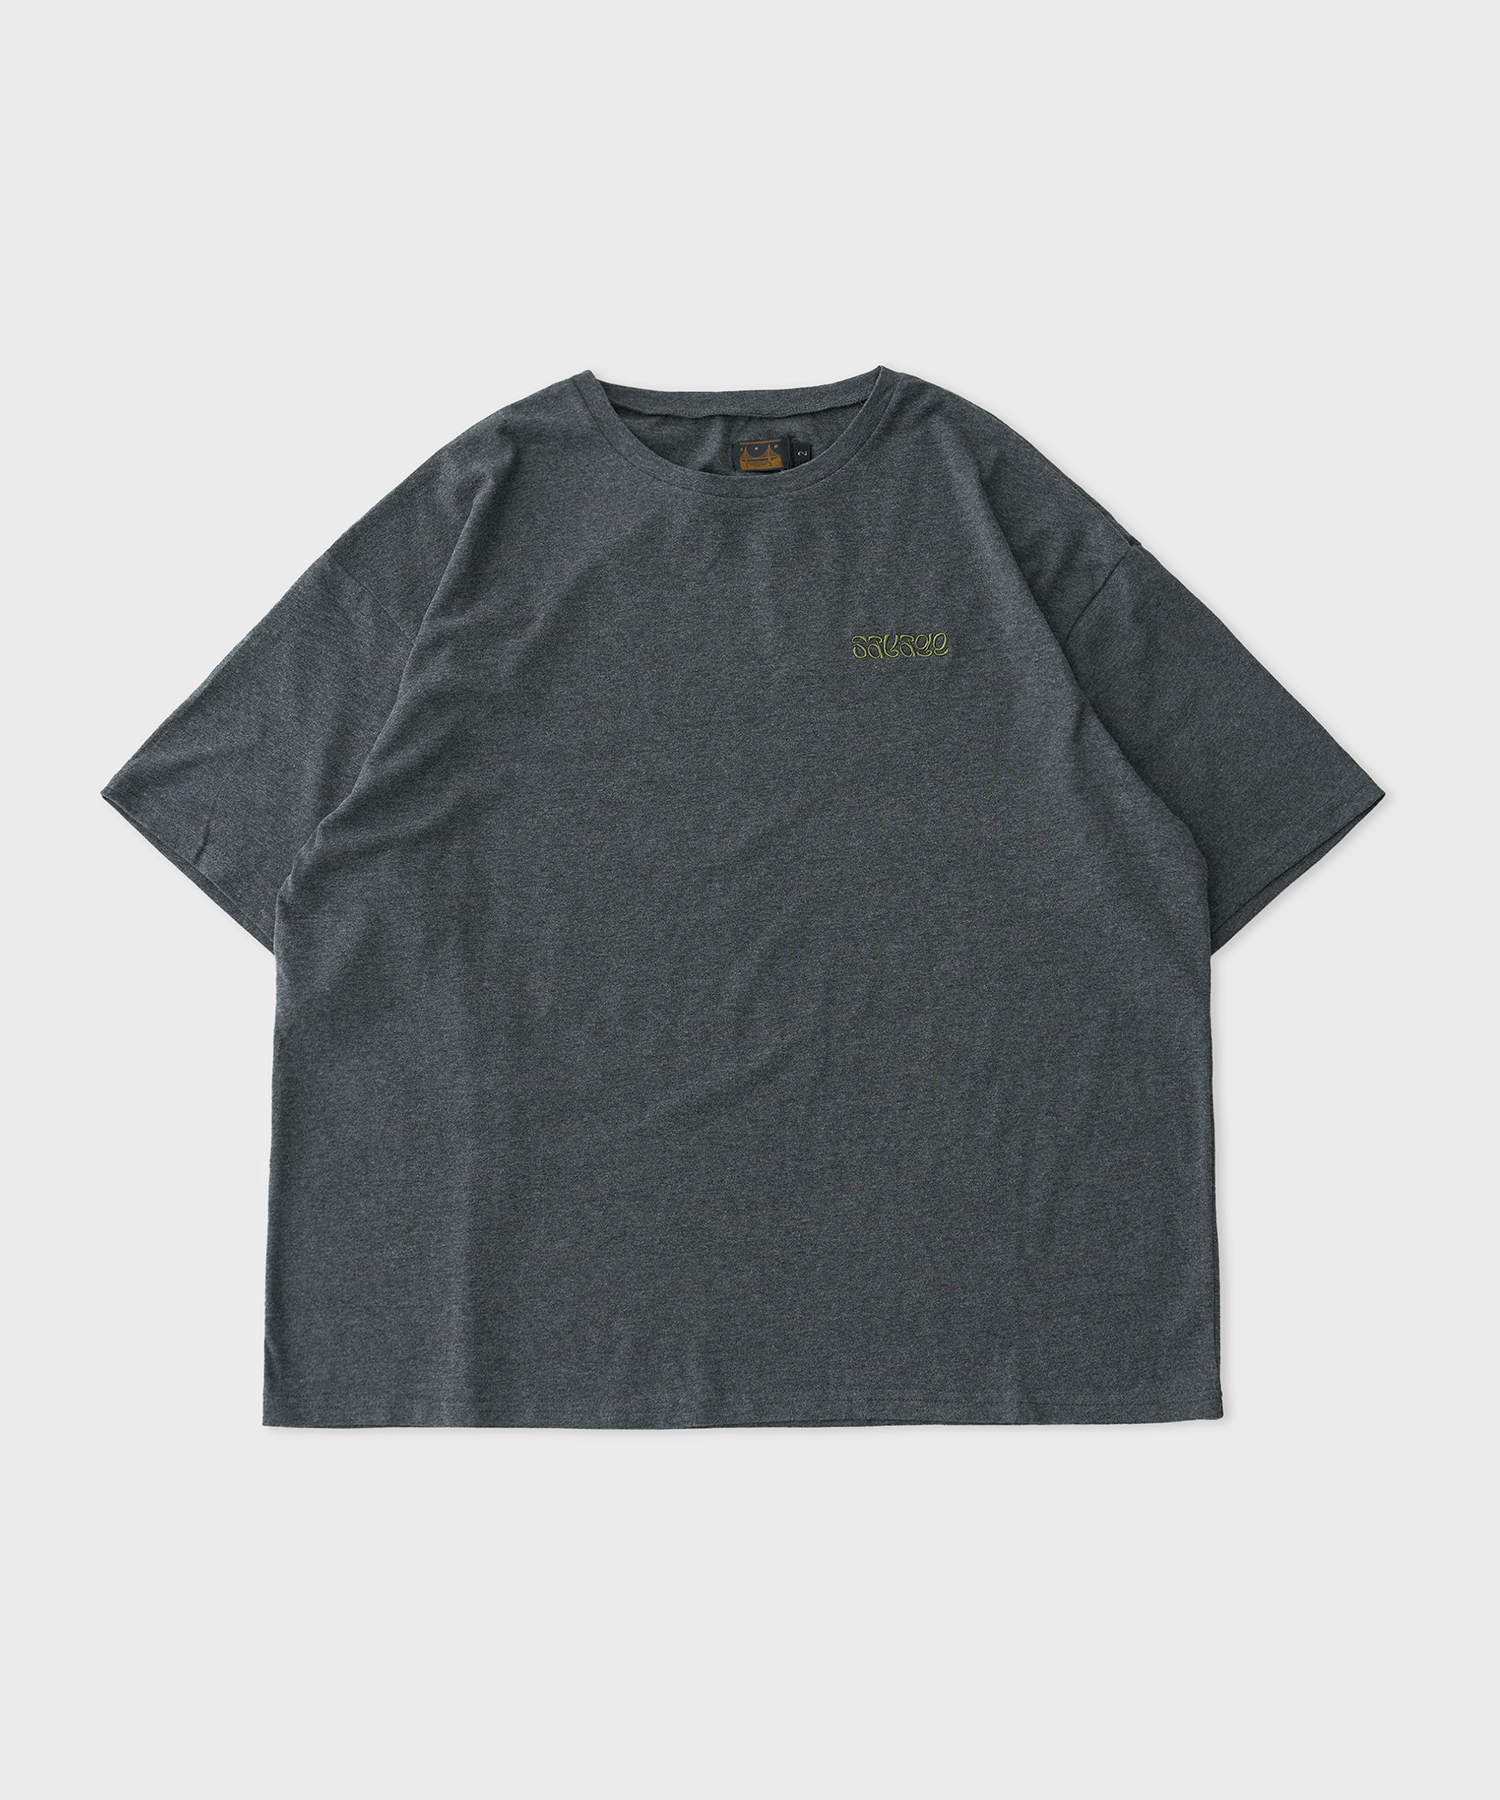 EMB Allround T-Shirt (Charcoal)